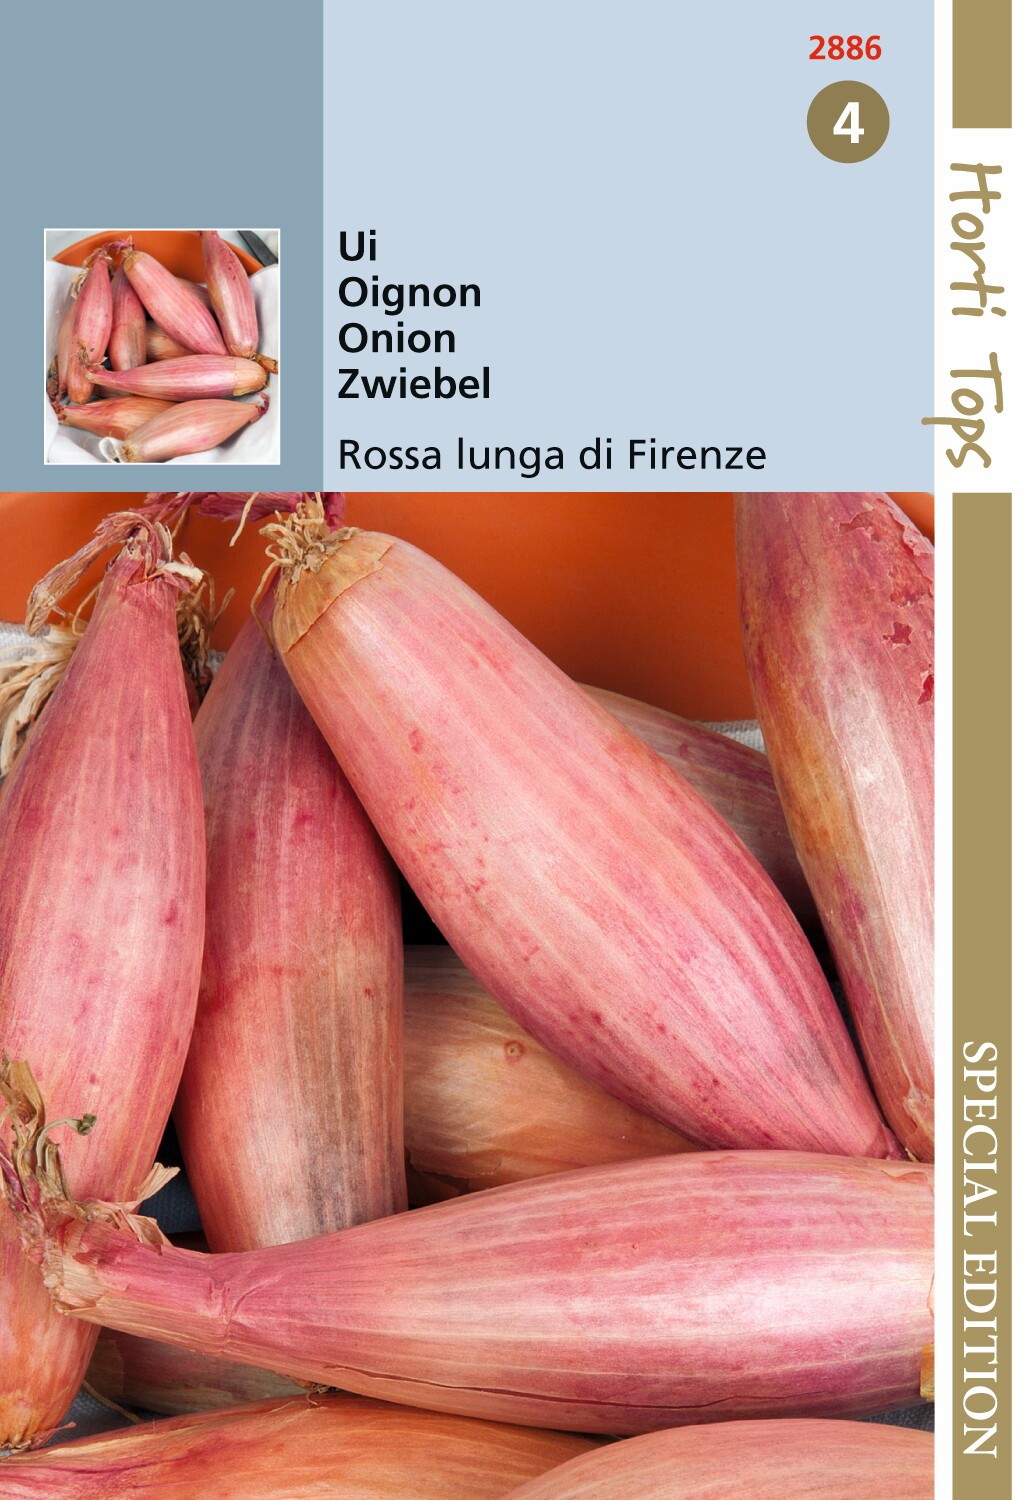 Hortitops zaden - Uien Rossa lunga di Firenze - Simiane 2 gram